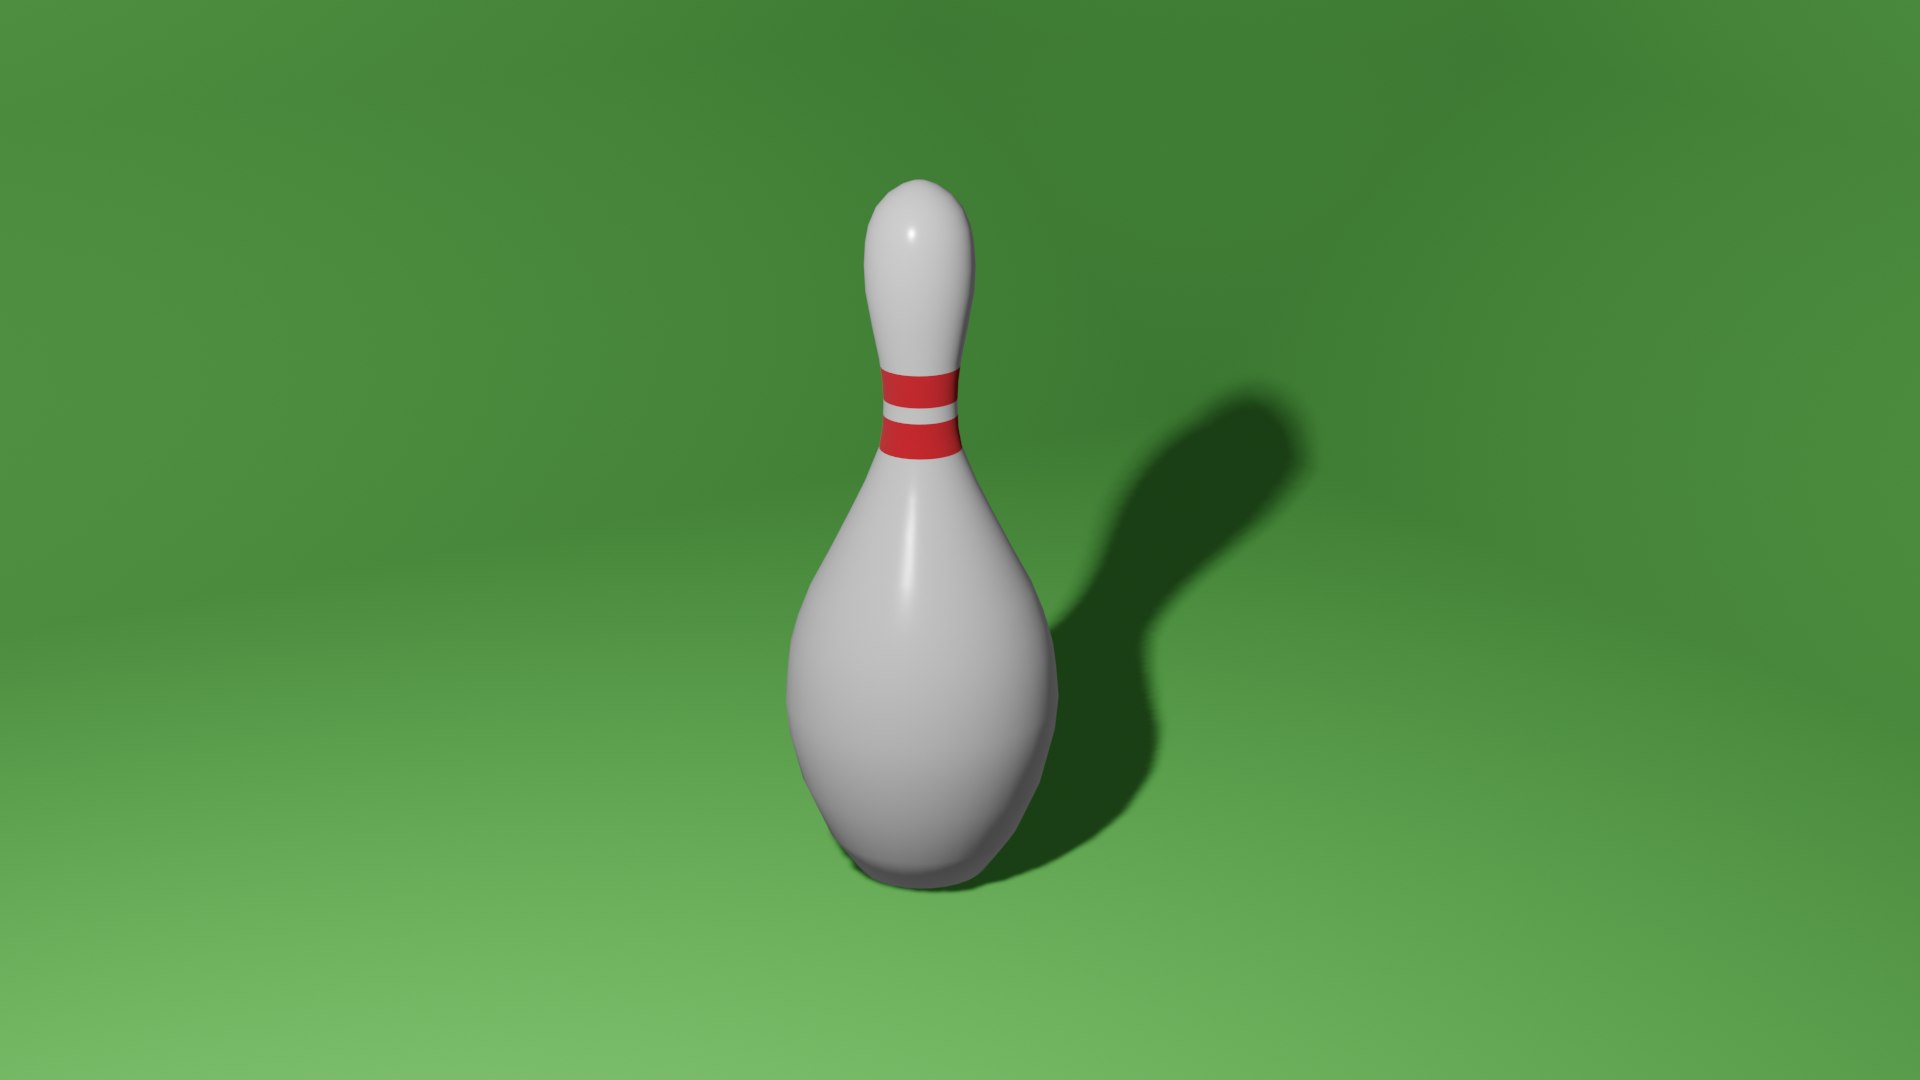 Bowling Pin 3D Model - TurboSquid 1599385